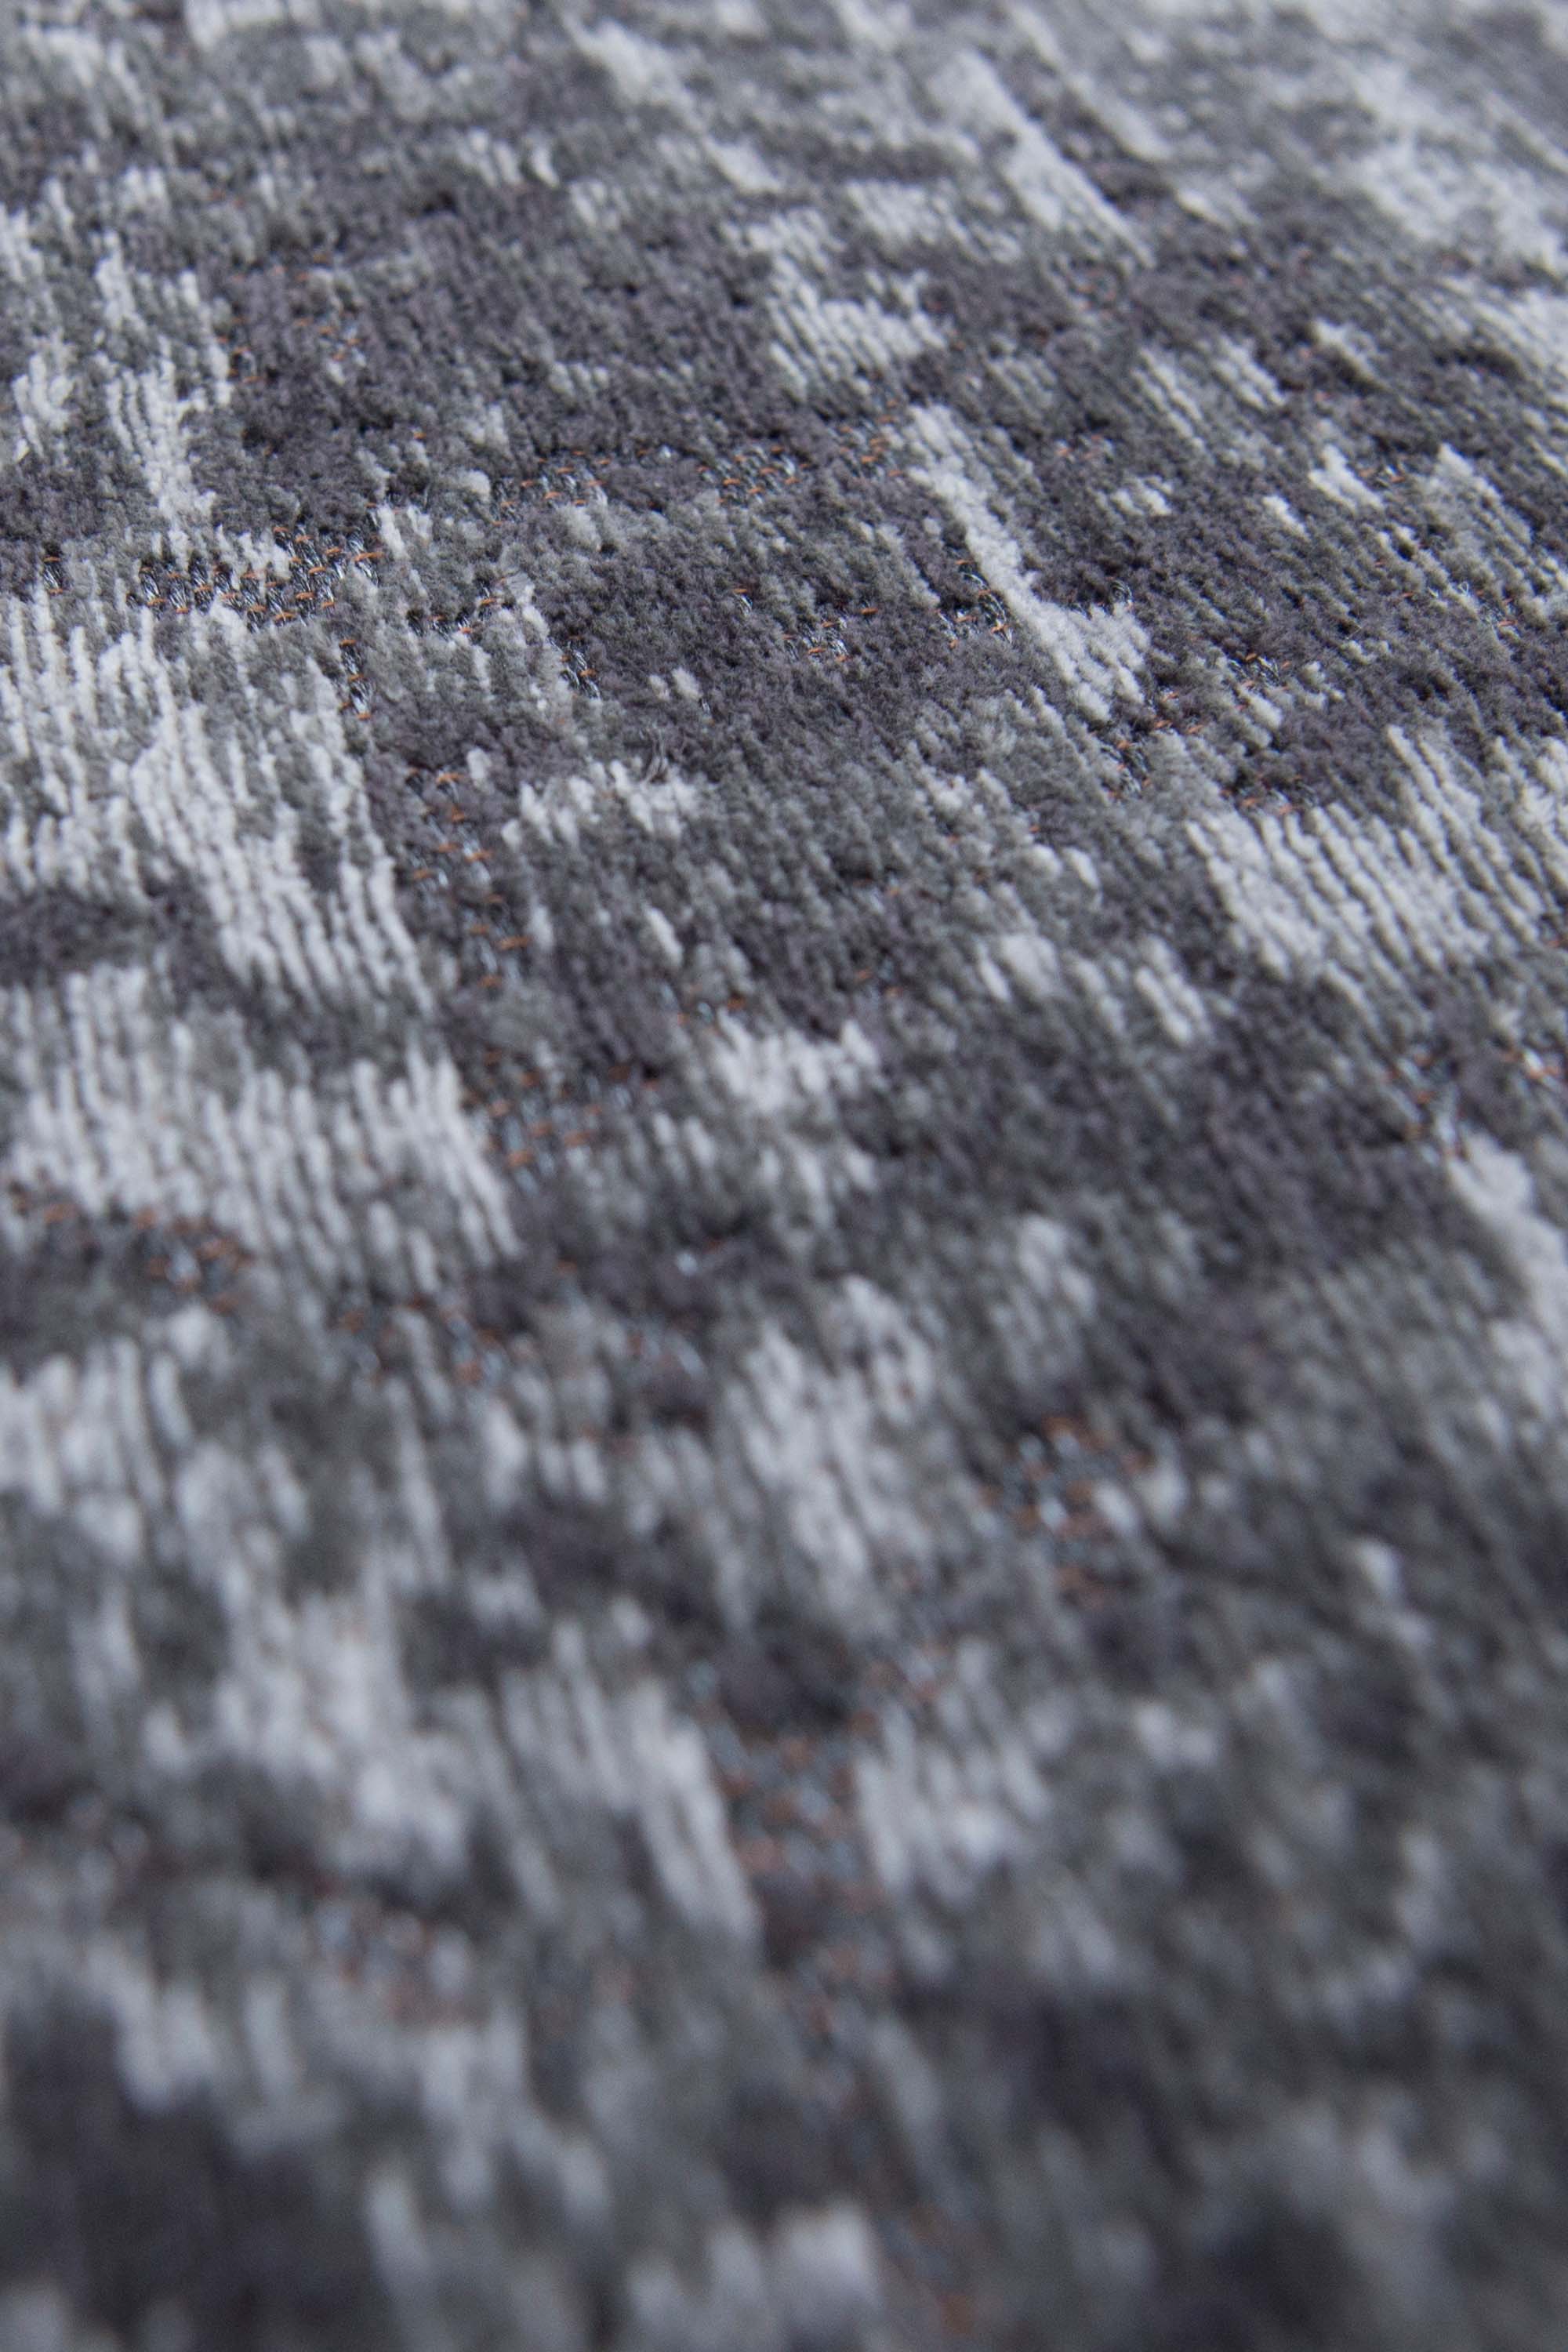 Black flatweave rug with faded grey chevron pattern